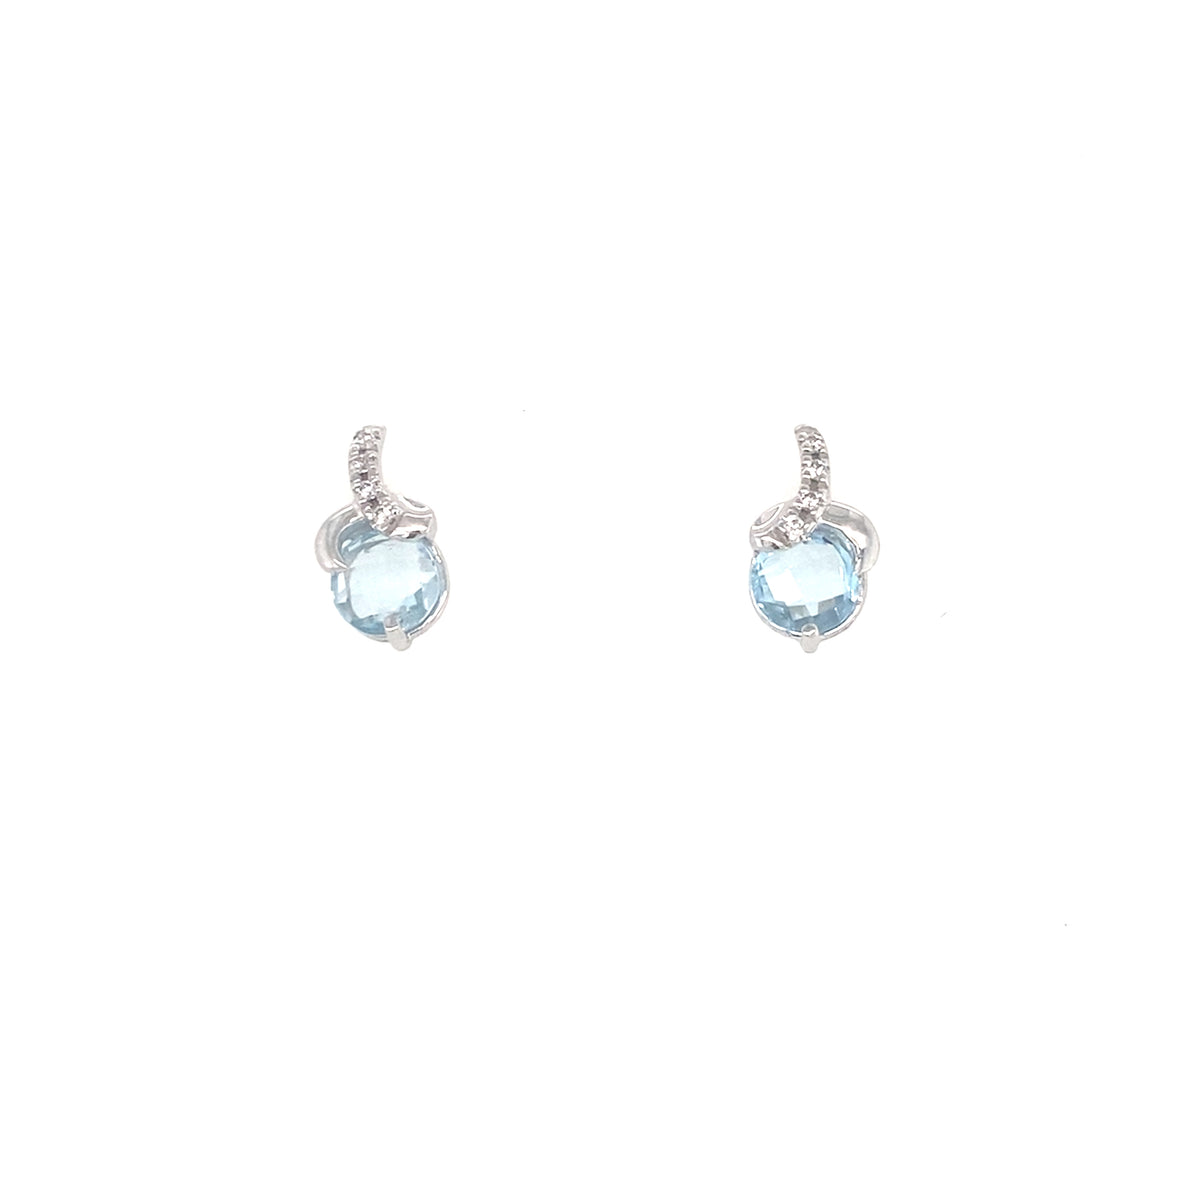 9kt White Gold Earrings with Diamonds &amp; Aquamarine Stones